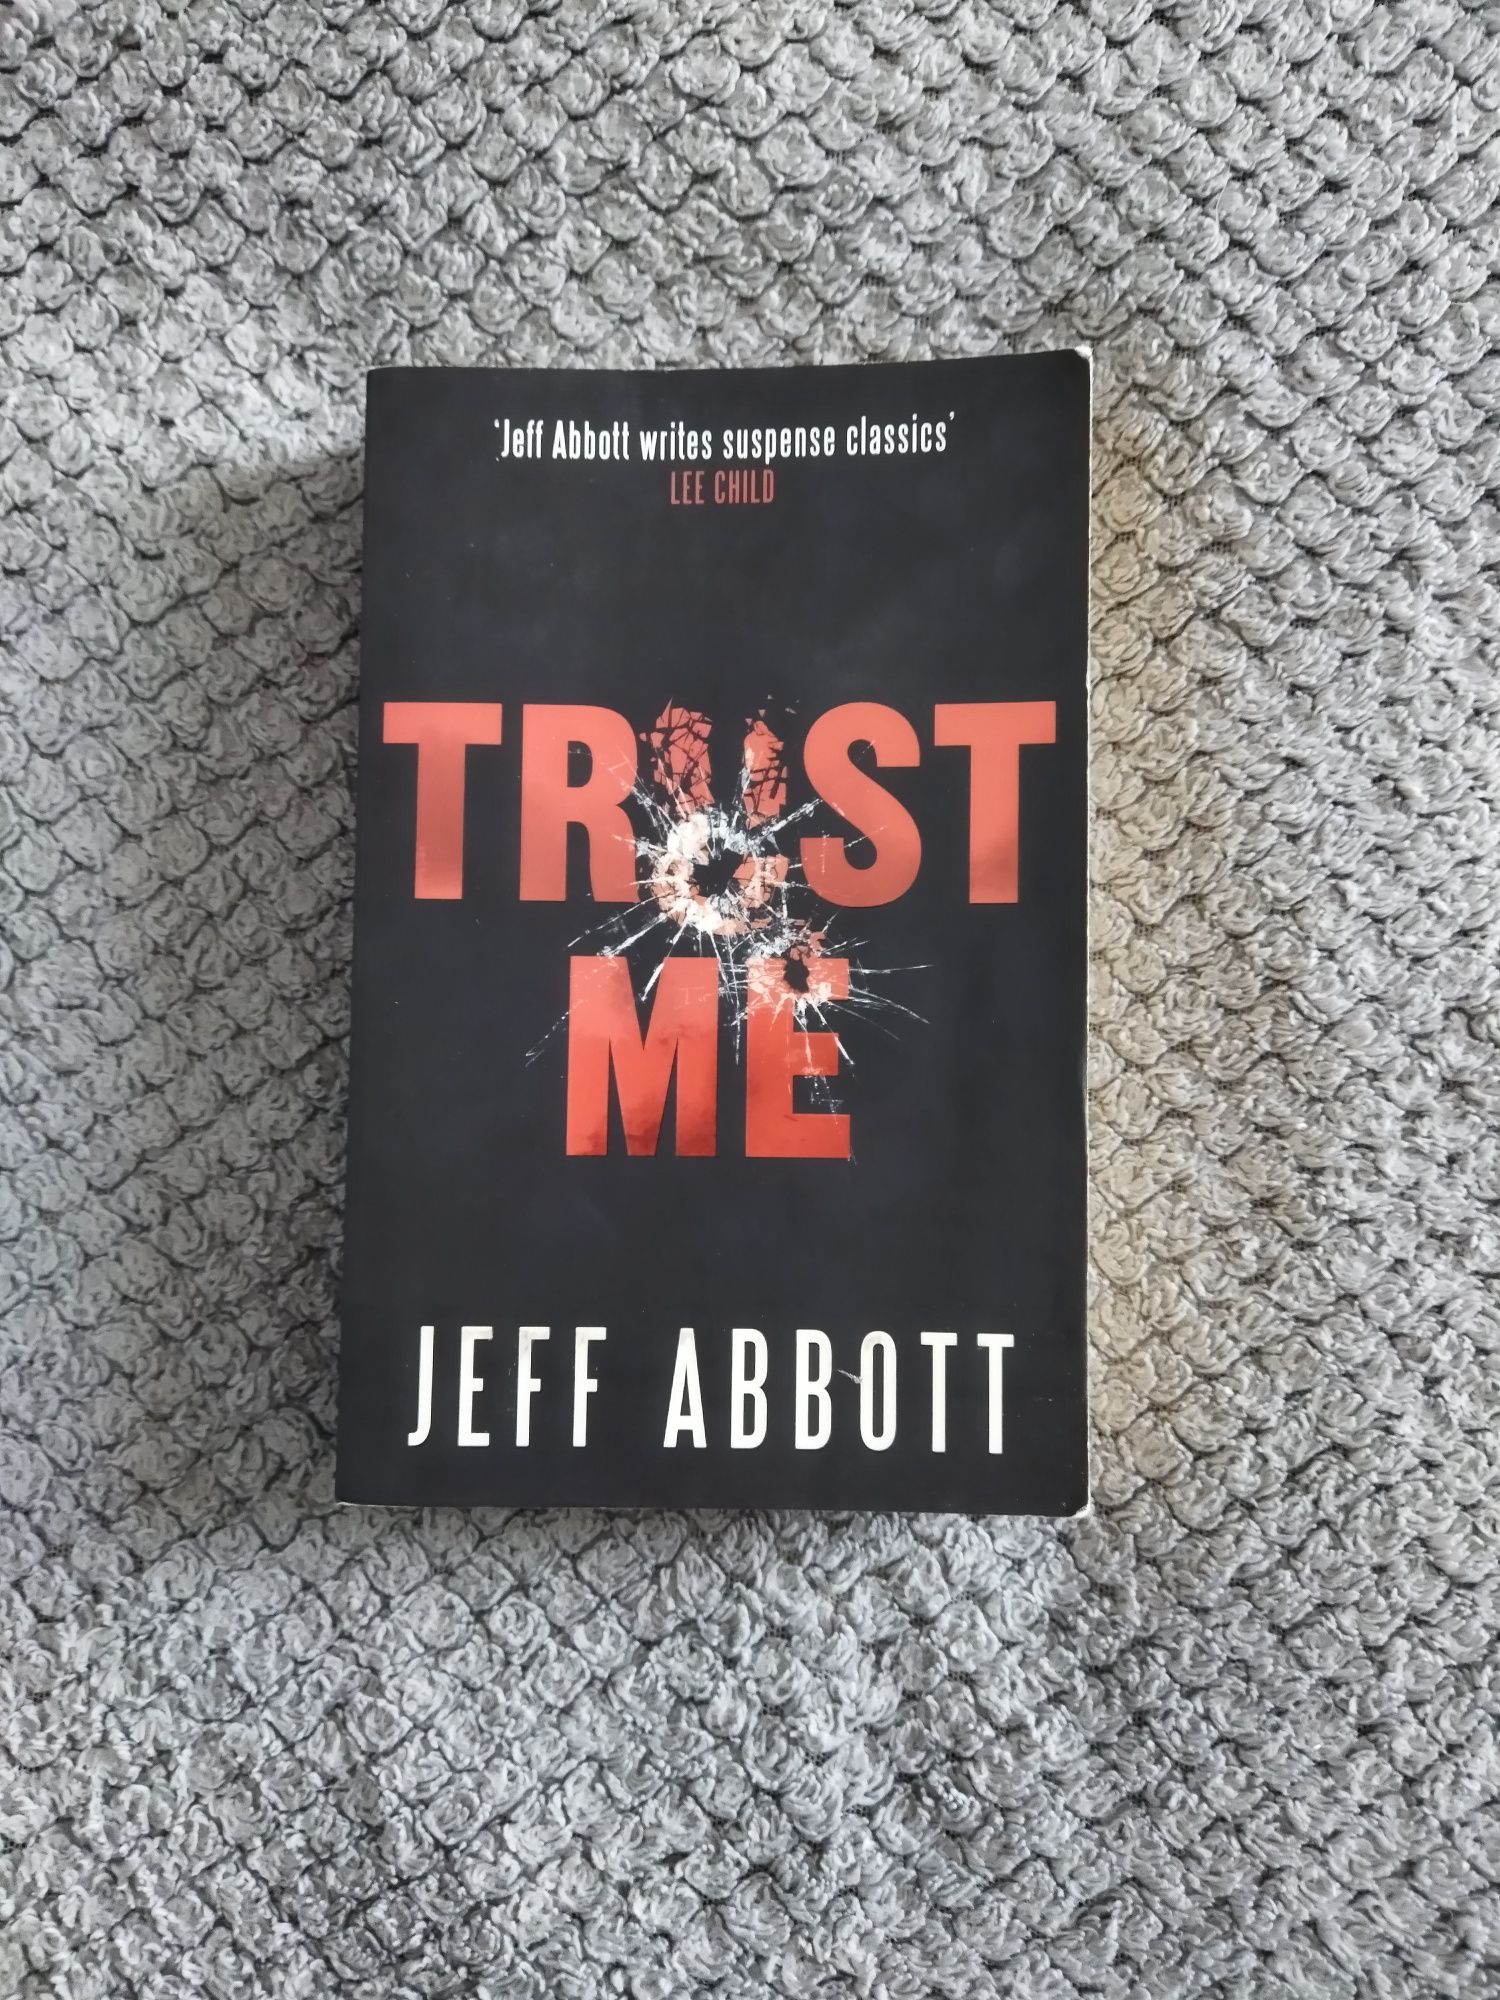 Książka " Trust me" Jeff Abbott. (po angielsku)